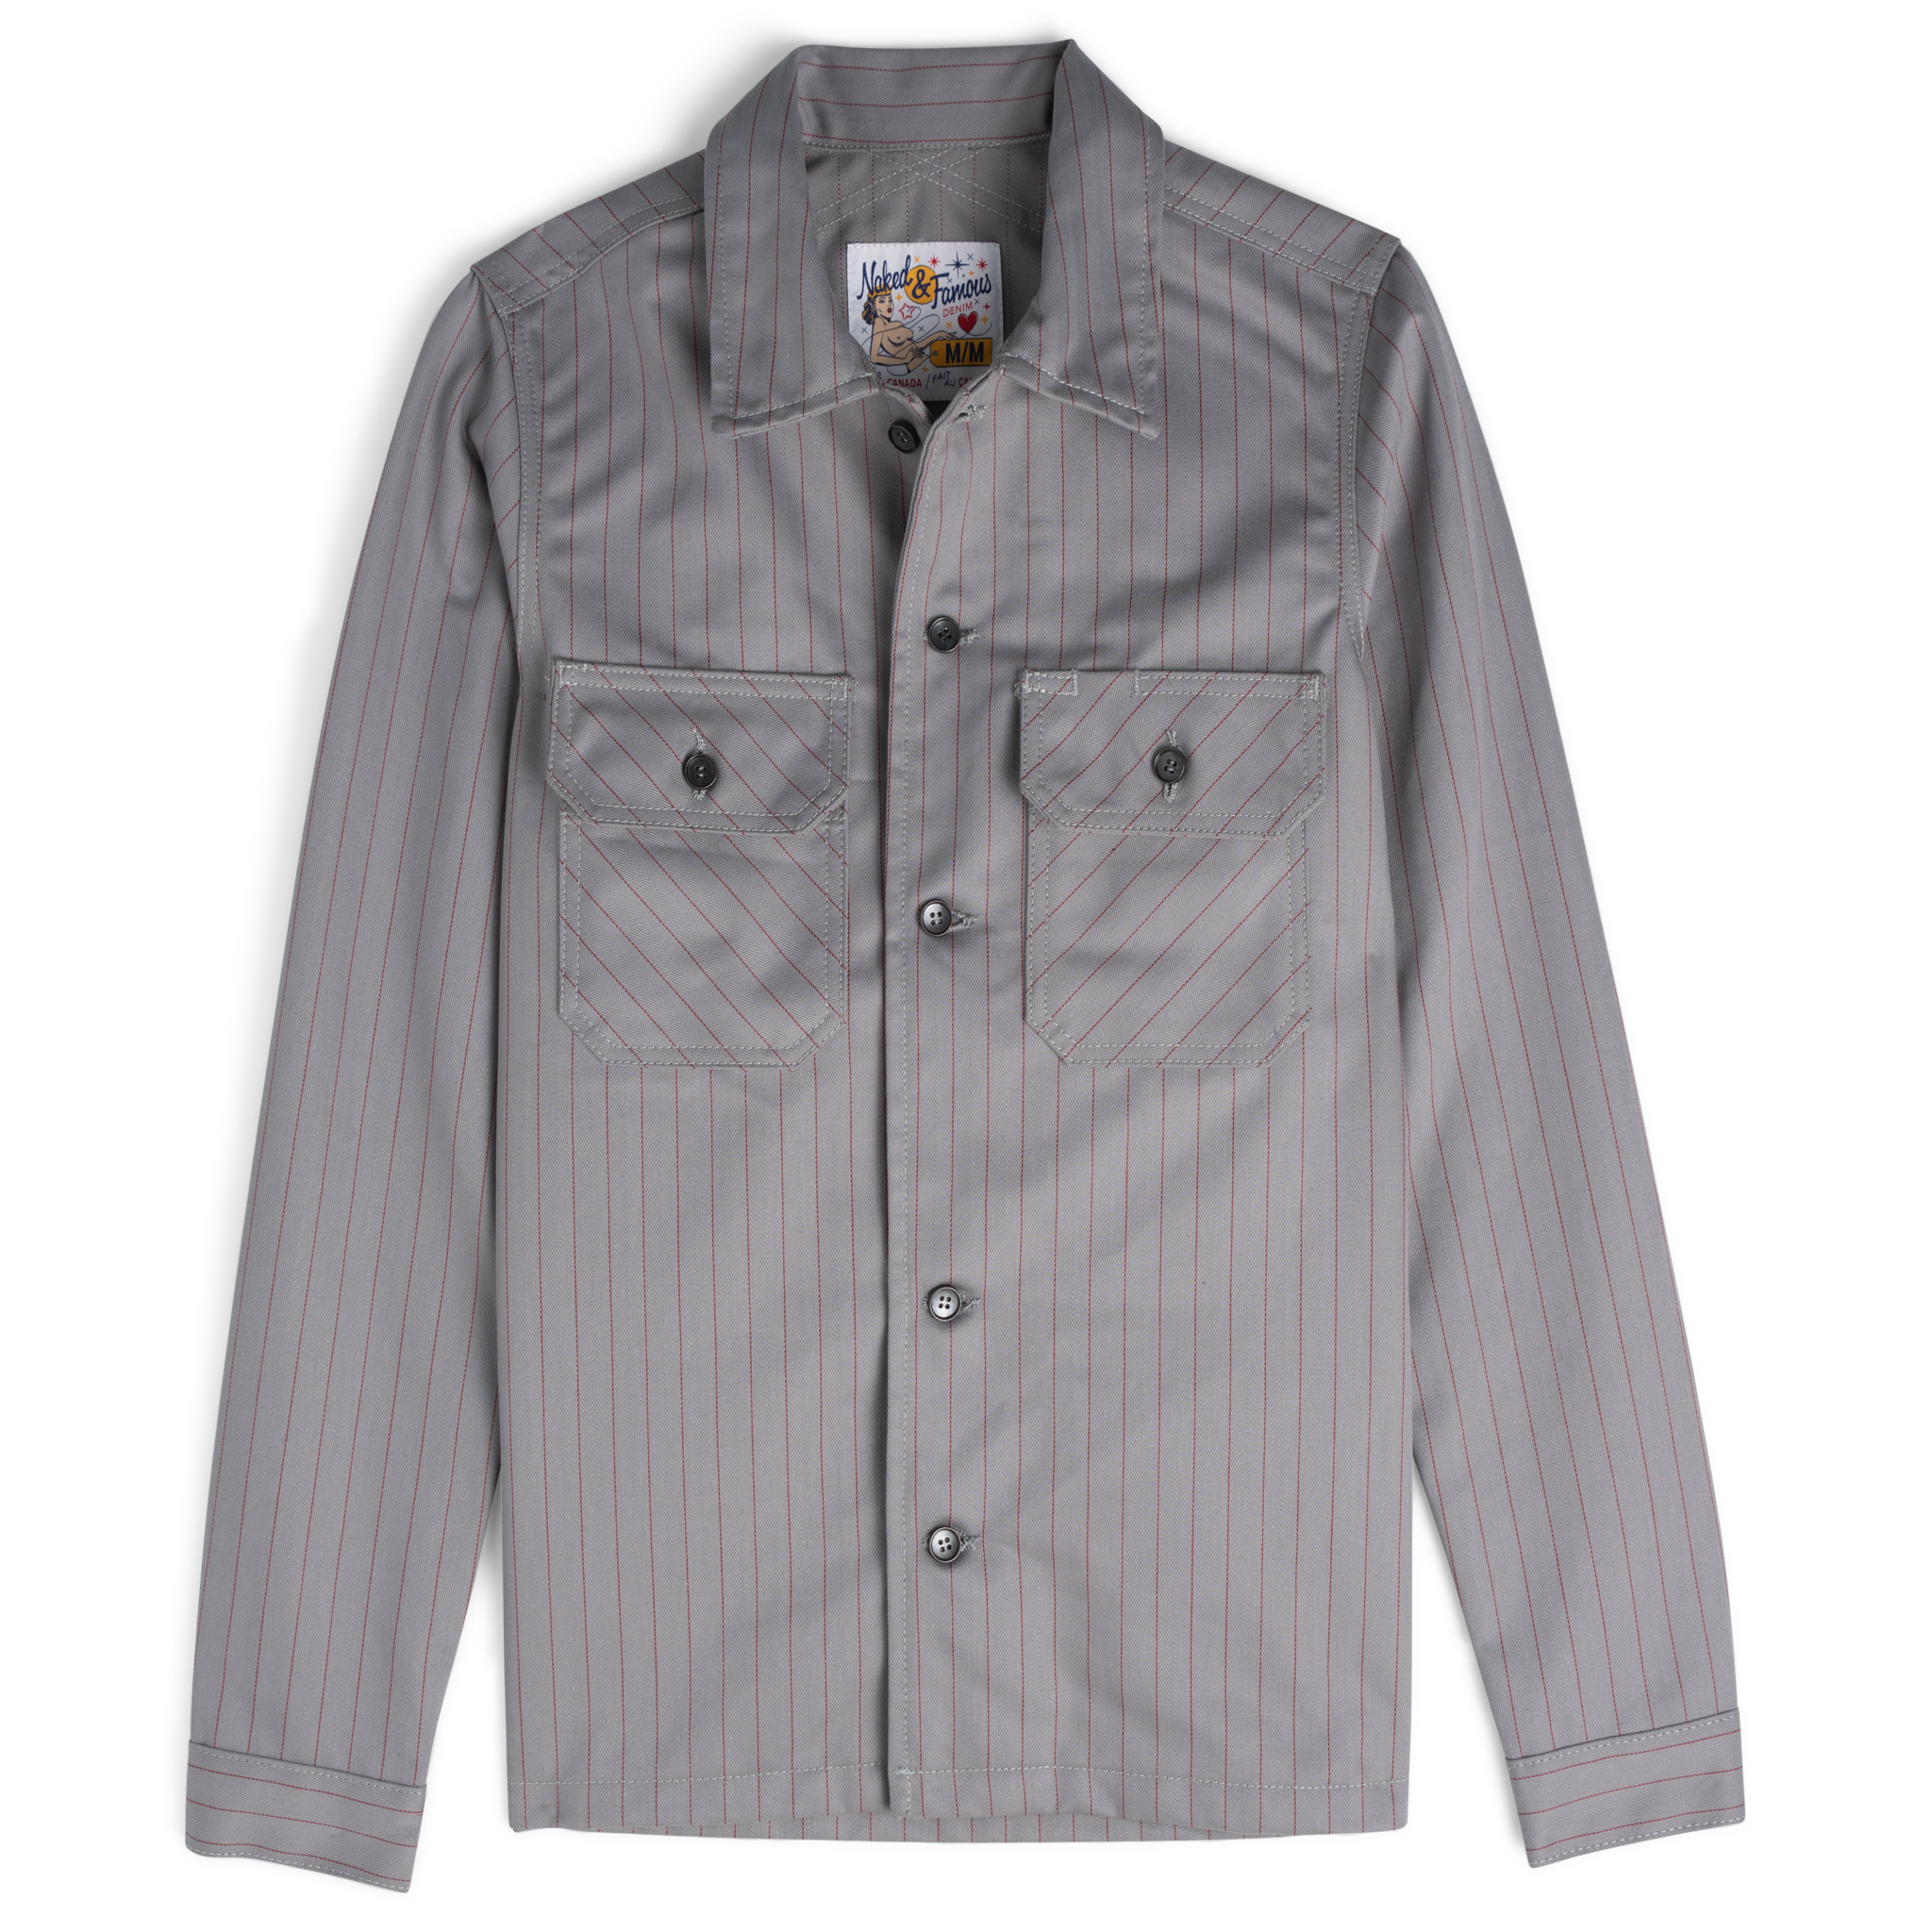  Work Shirt - Repro Workwear Twill - Grey - flat front 